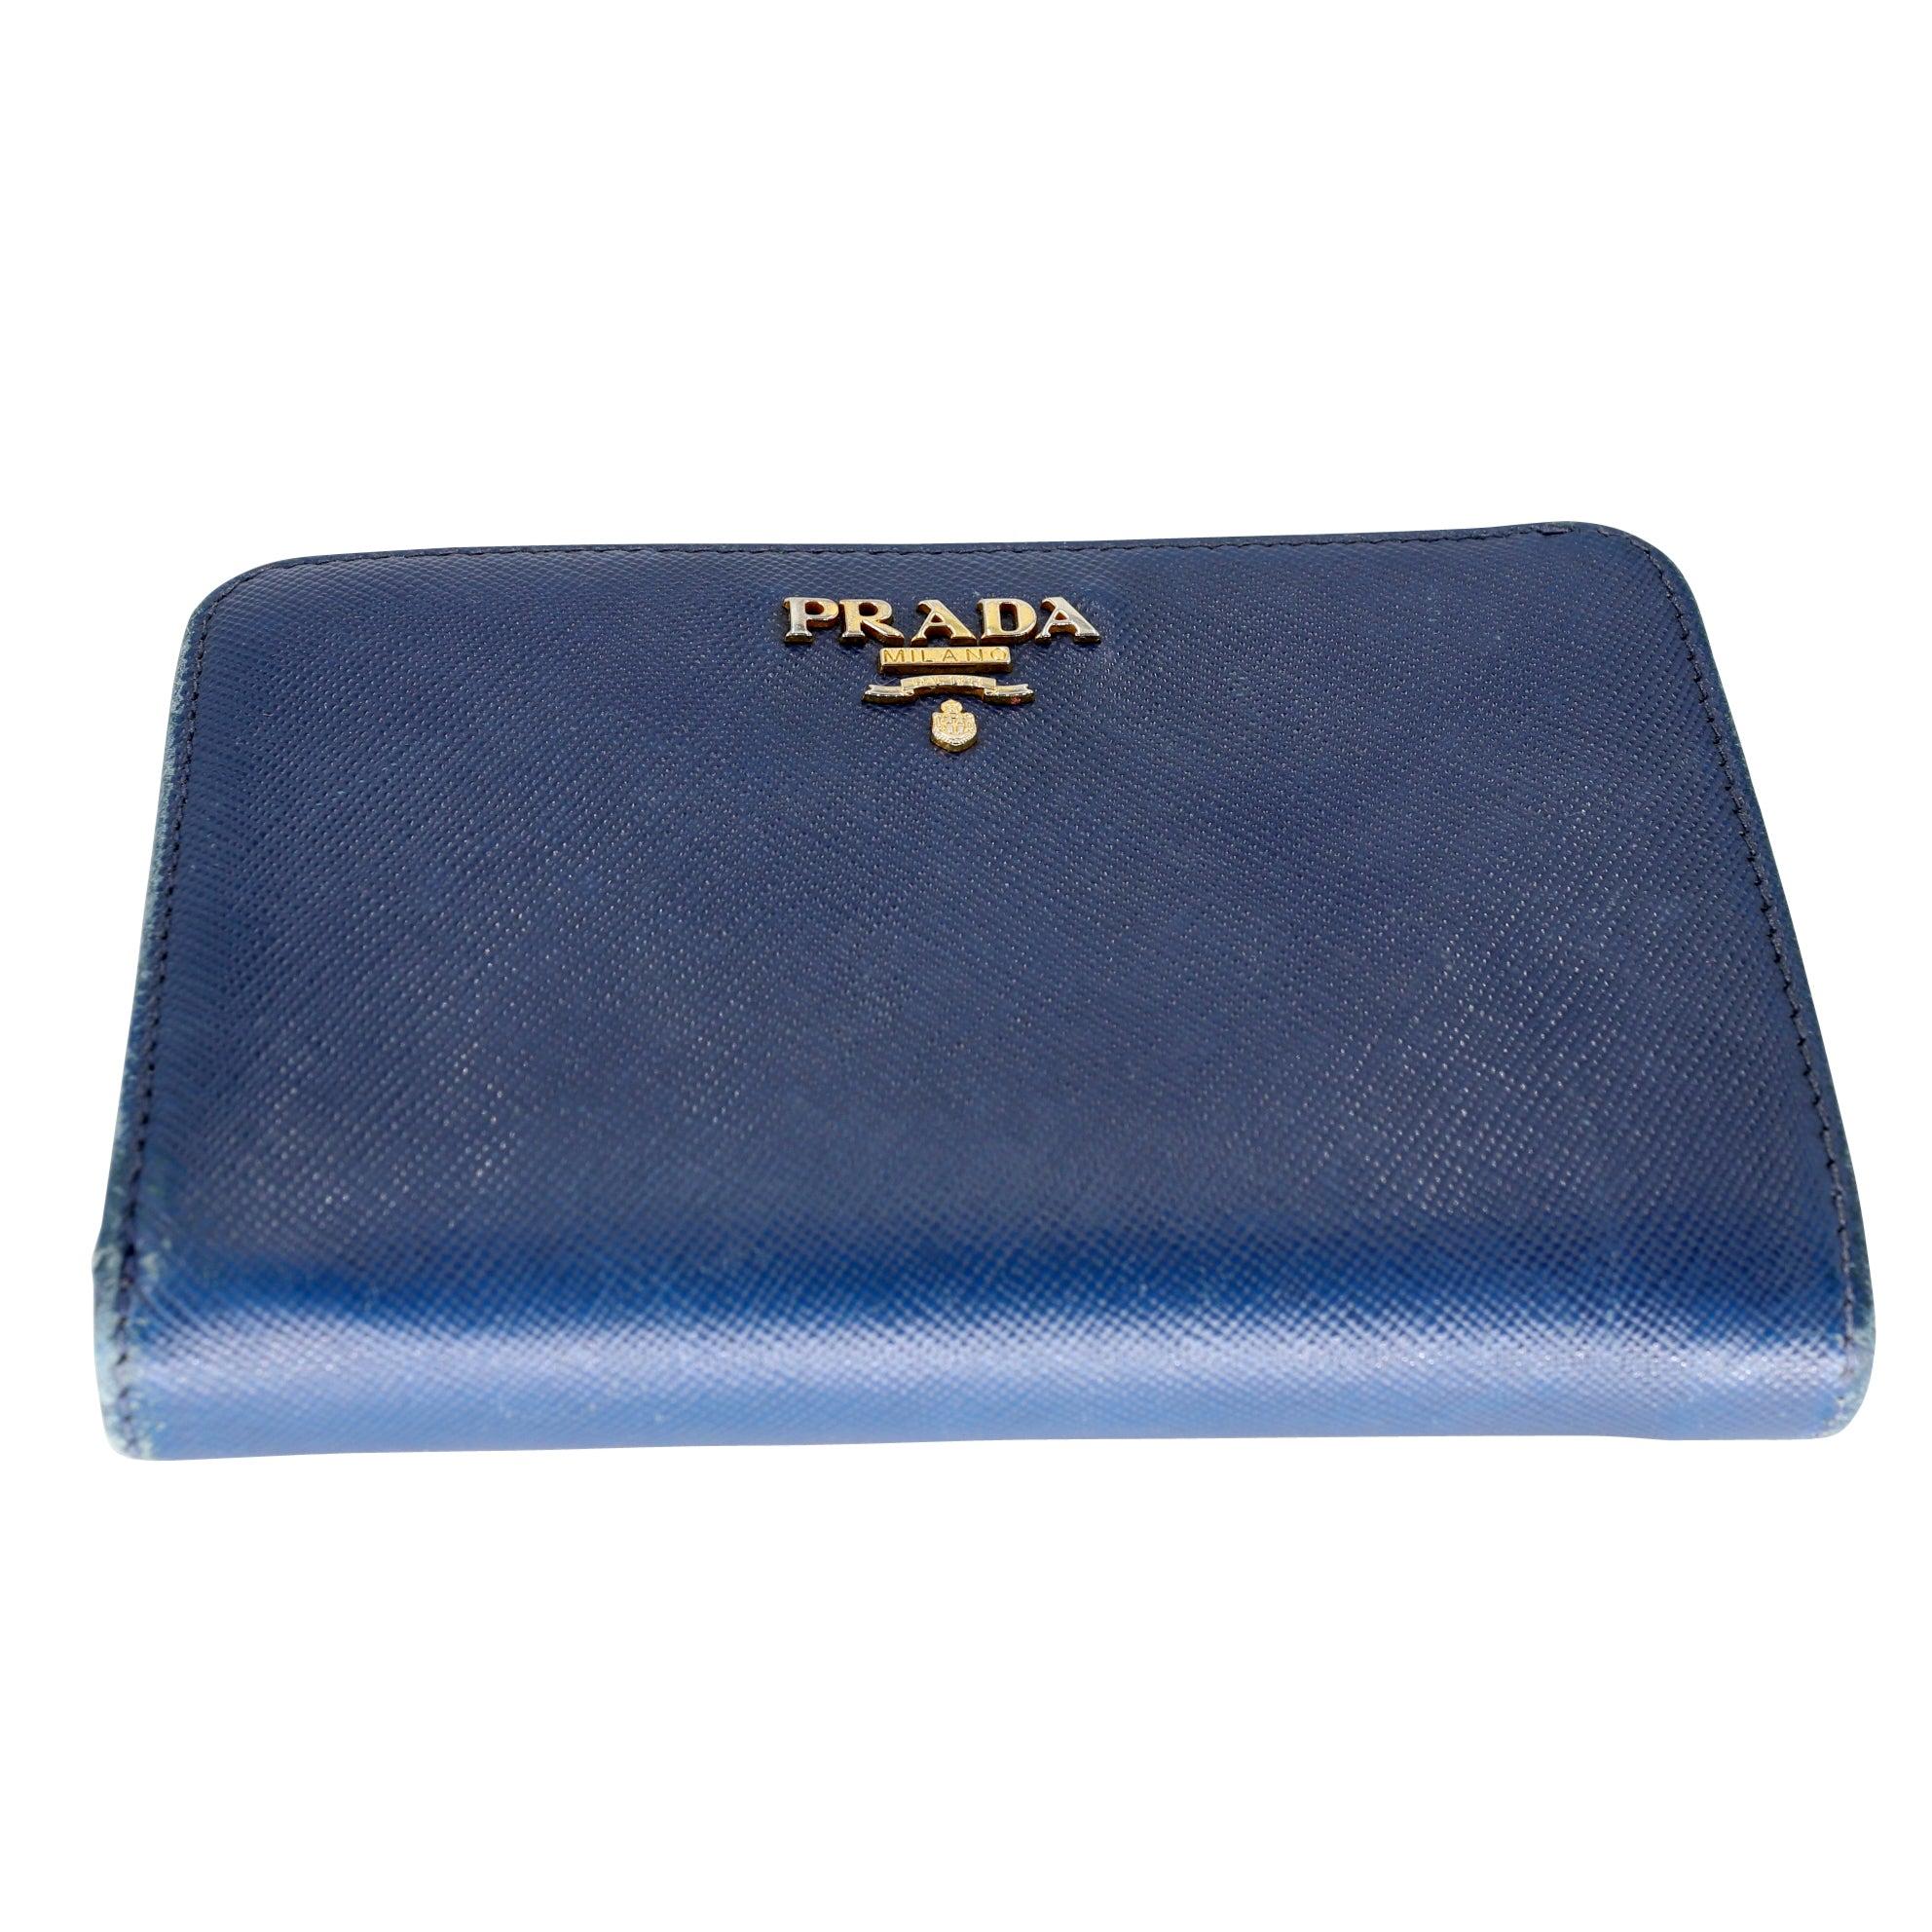 Women's Prada Milano Saffiano Leather Travel Wallet PR-W1005P-A003 For Sale